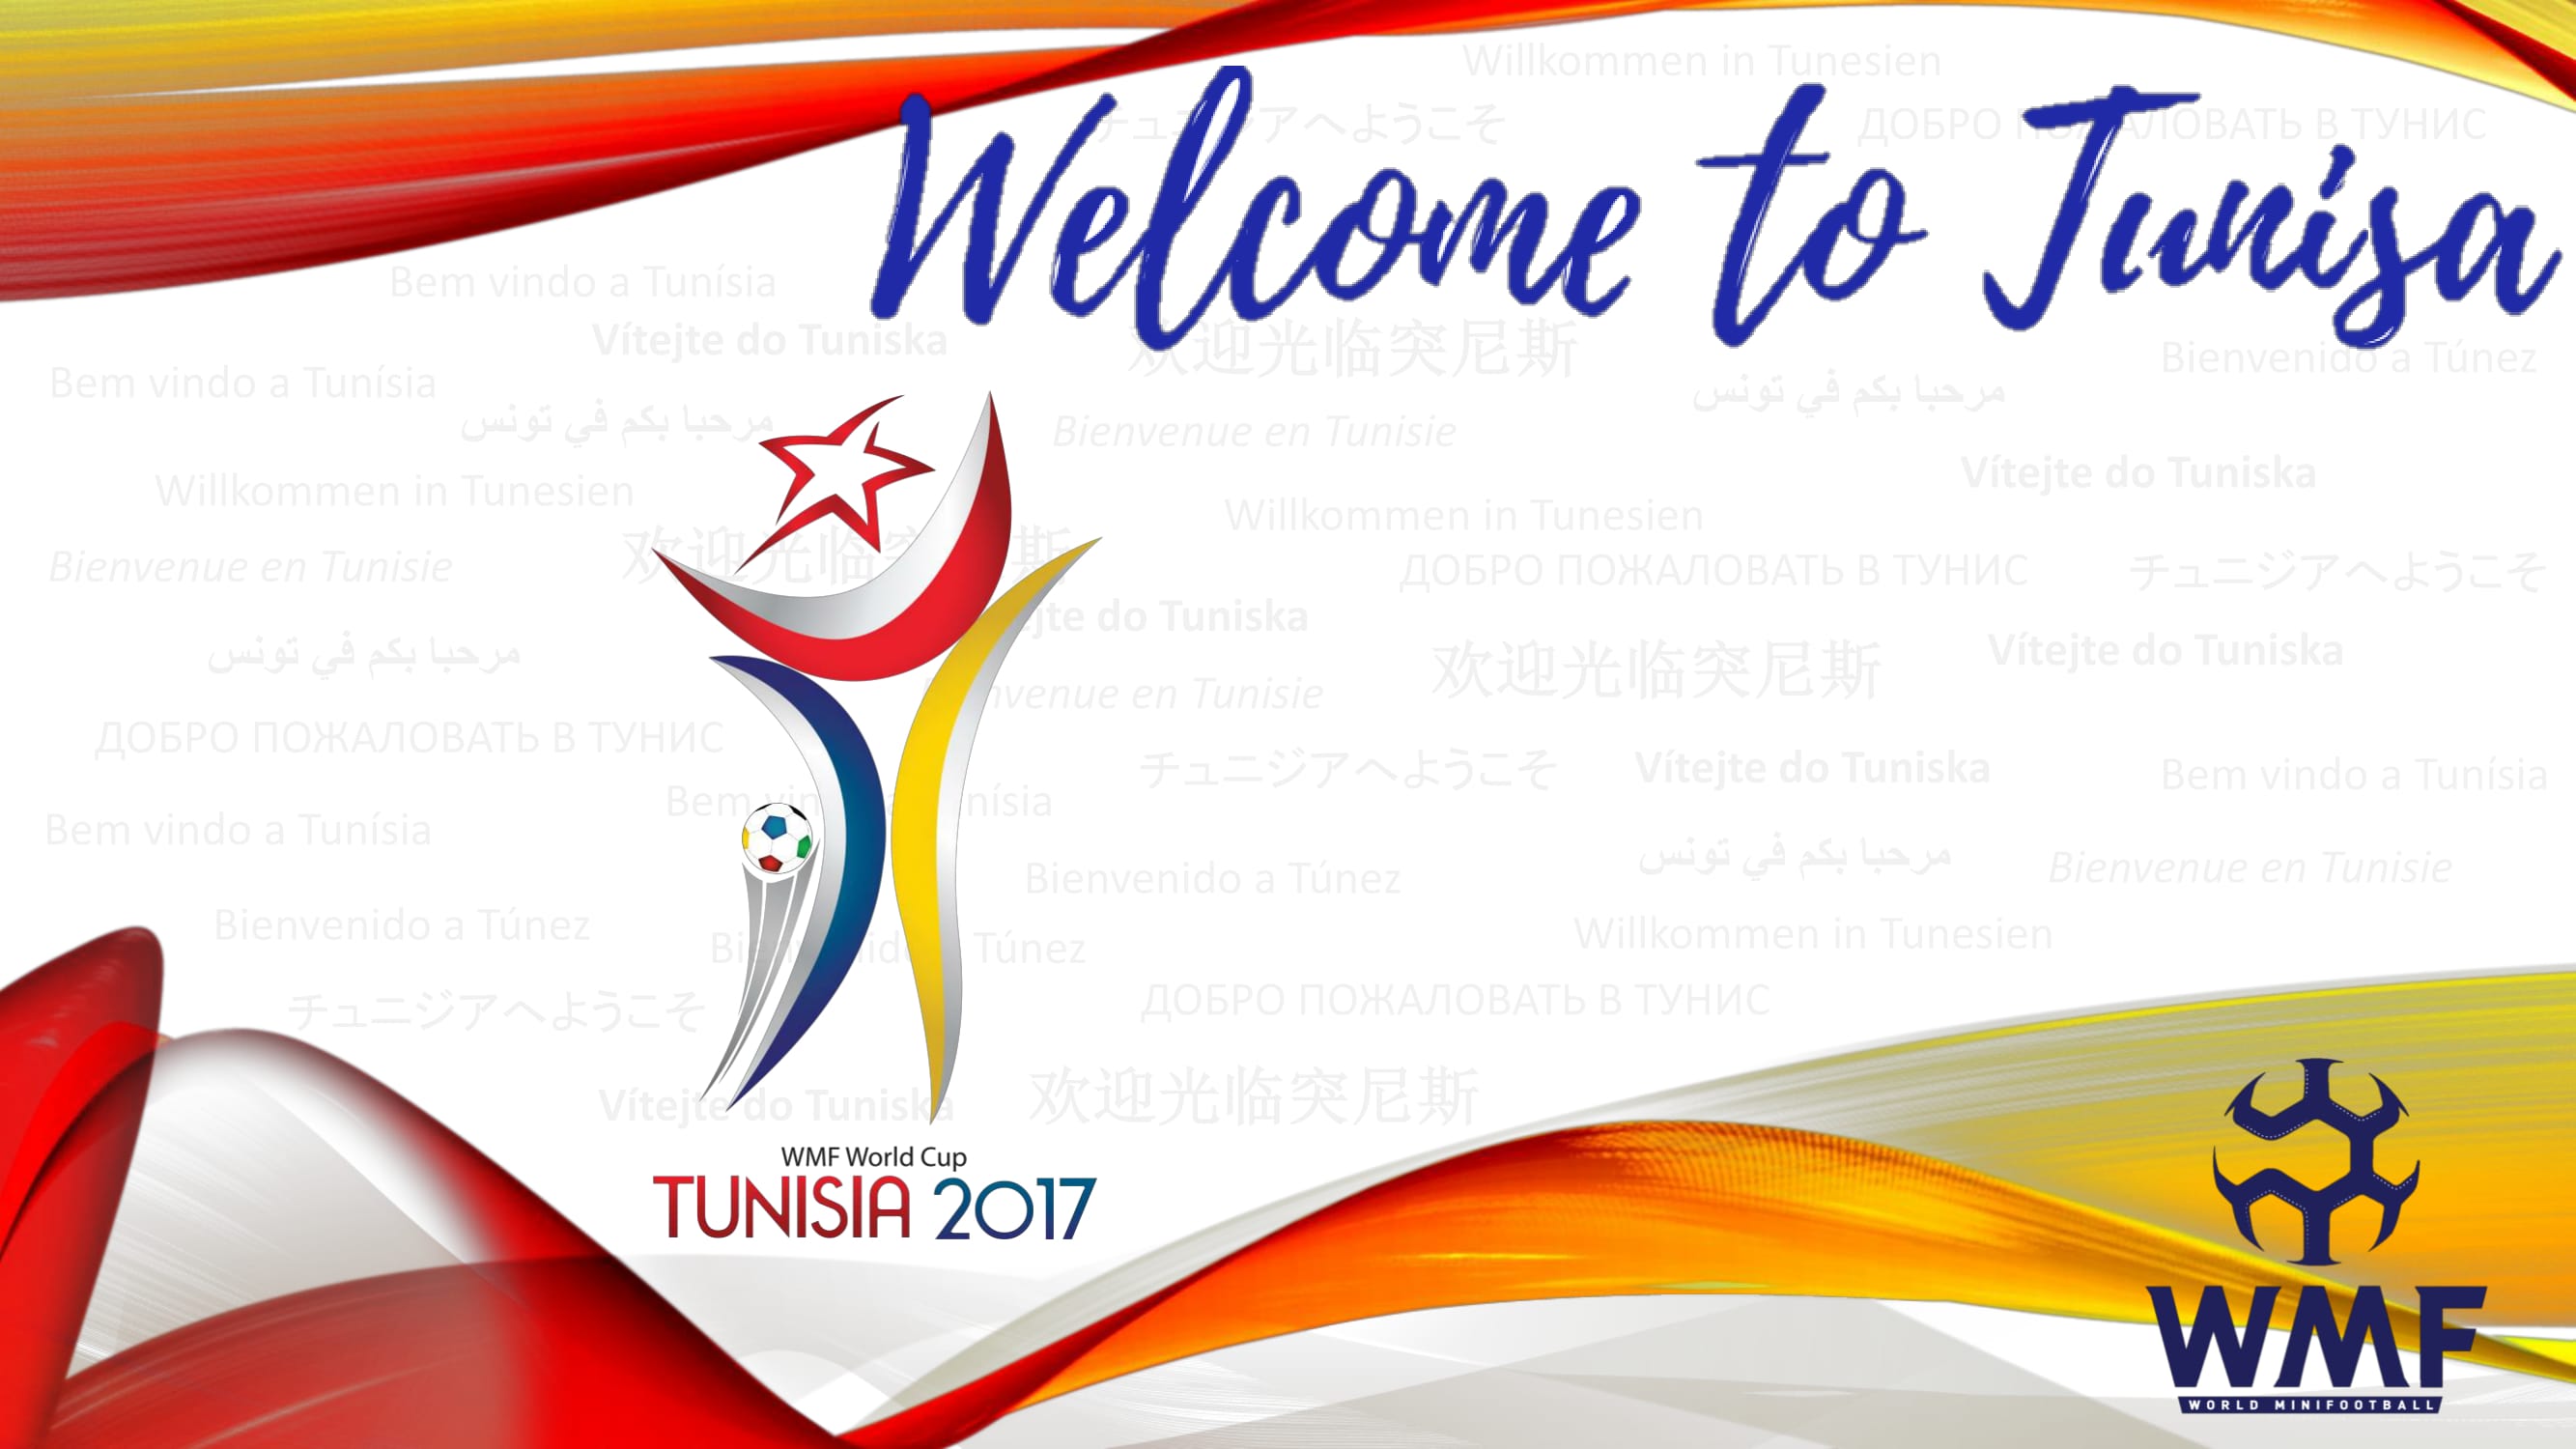 Wellcome to tunisia-01